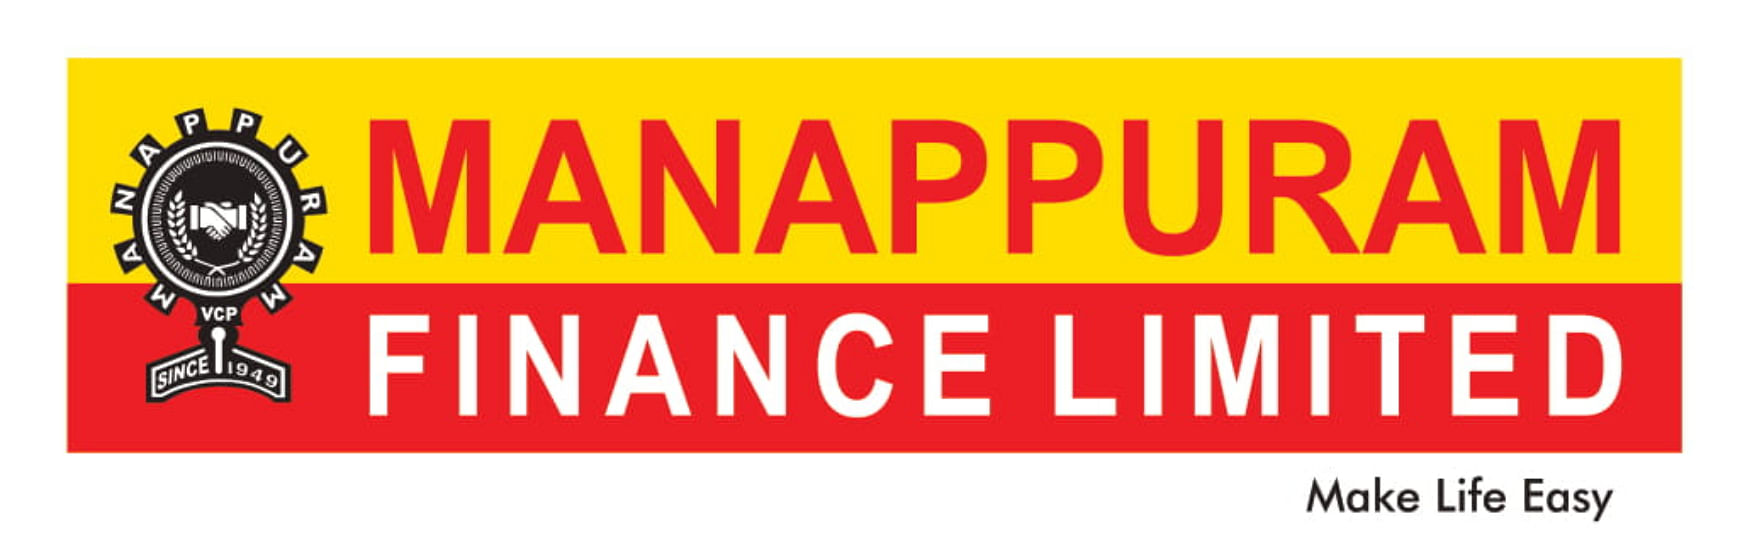 Manappuram Finance logo (Photo from www.manappuram.com)